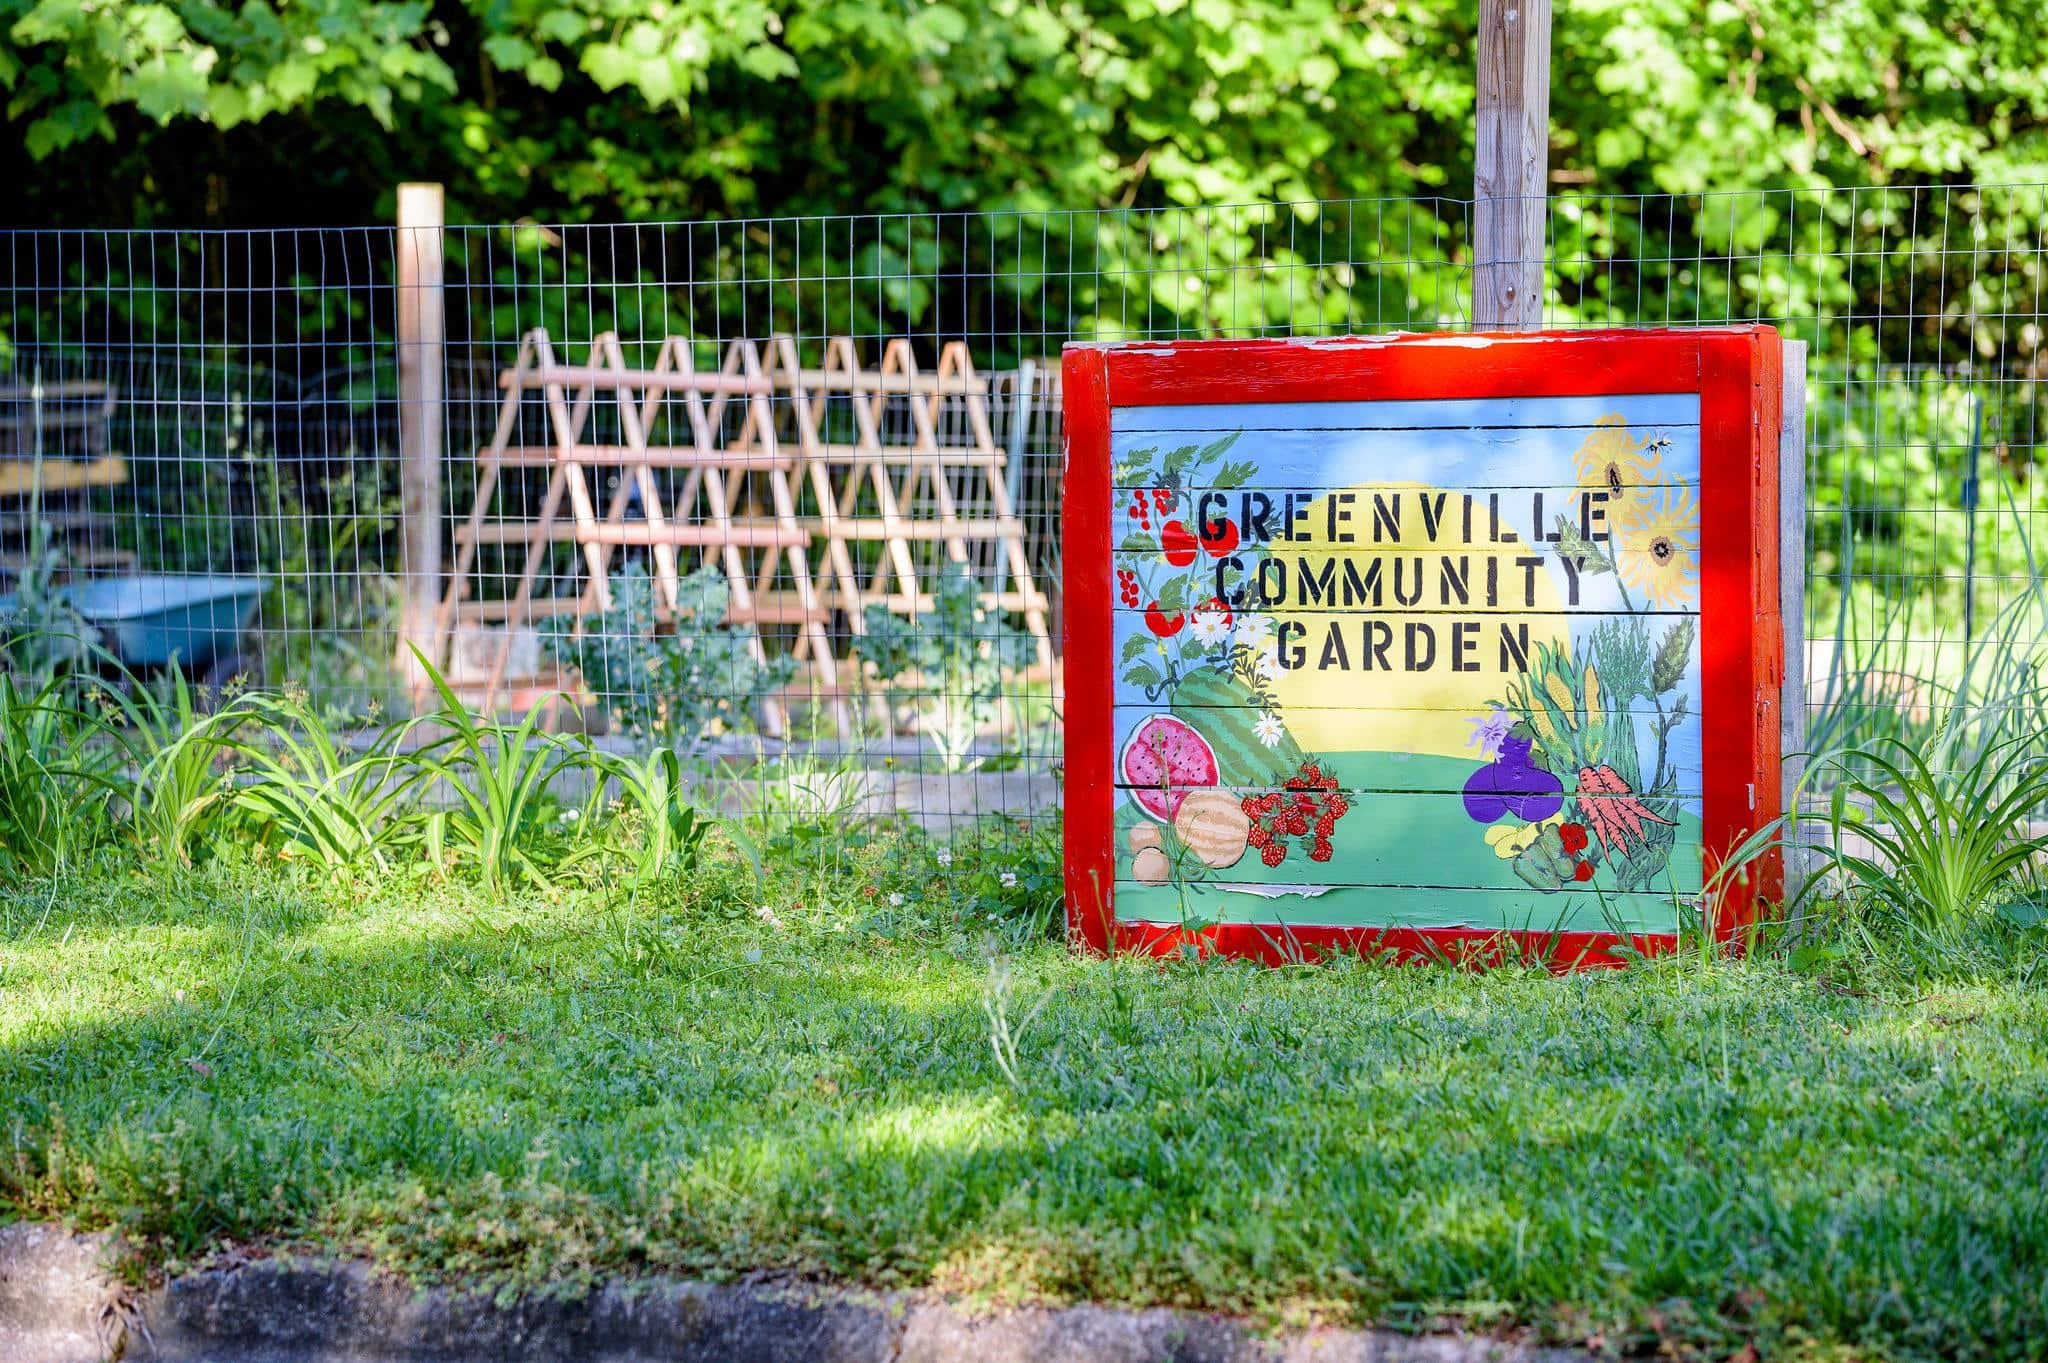 Greenville community garden on Stancill Drive